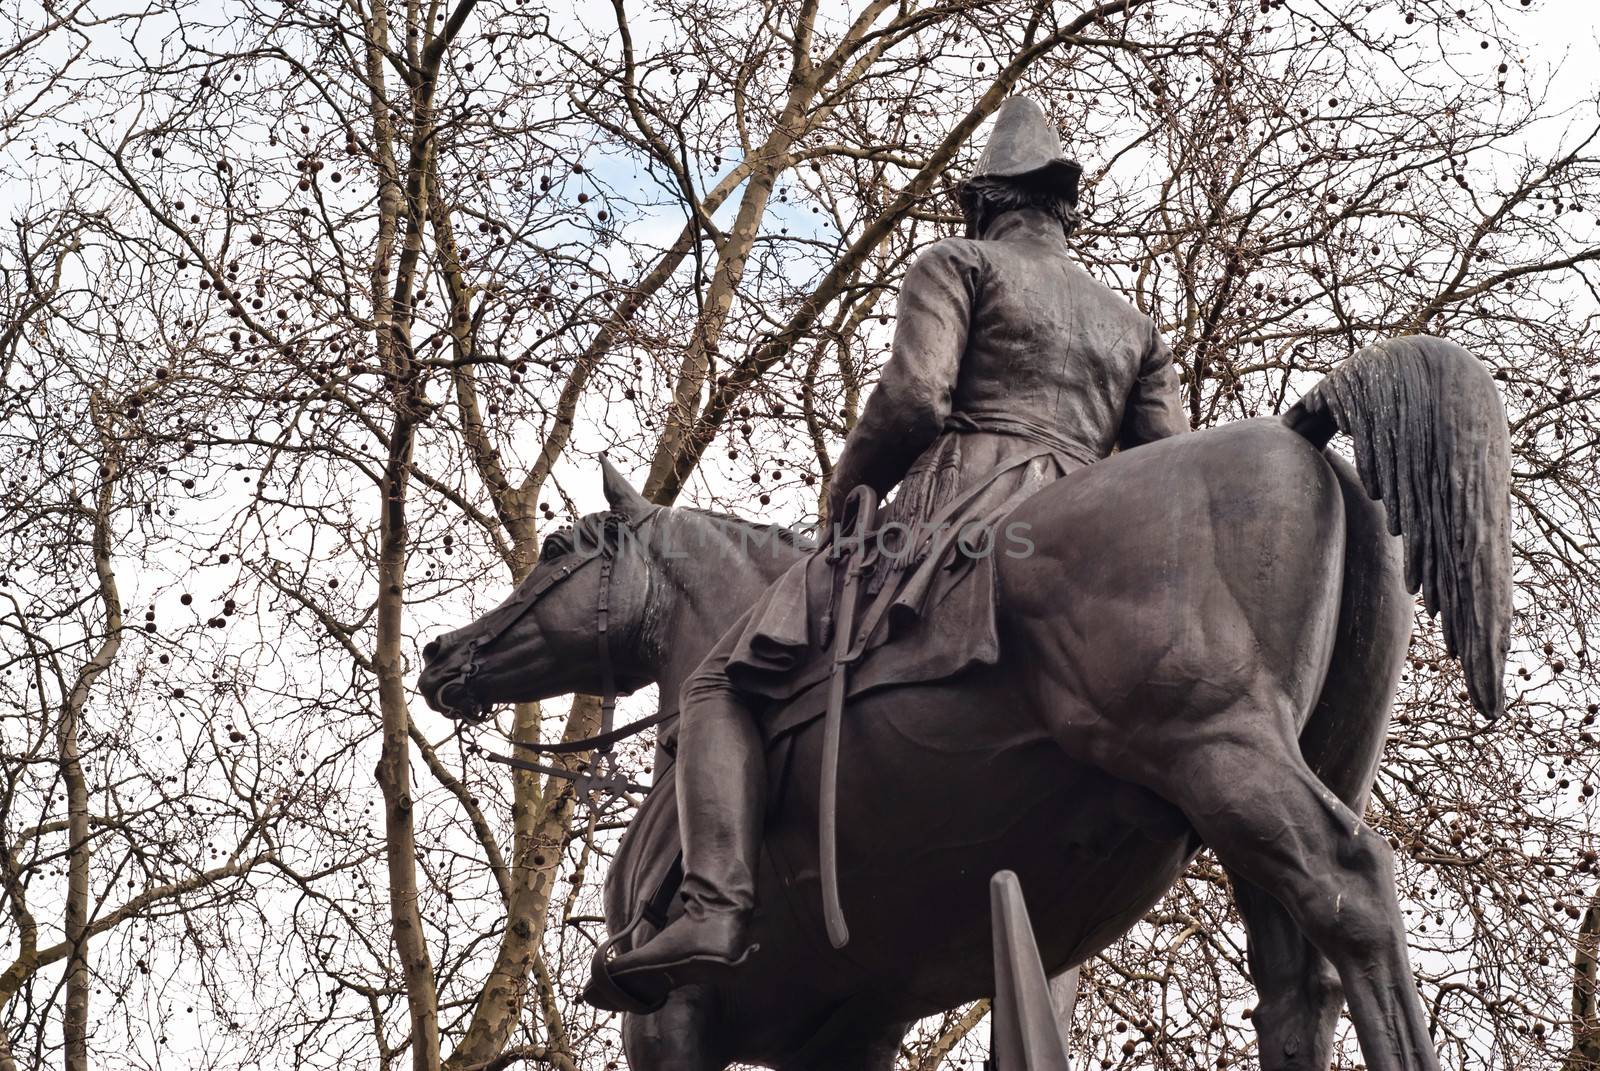 Duke of Wellington statue, London England UK